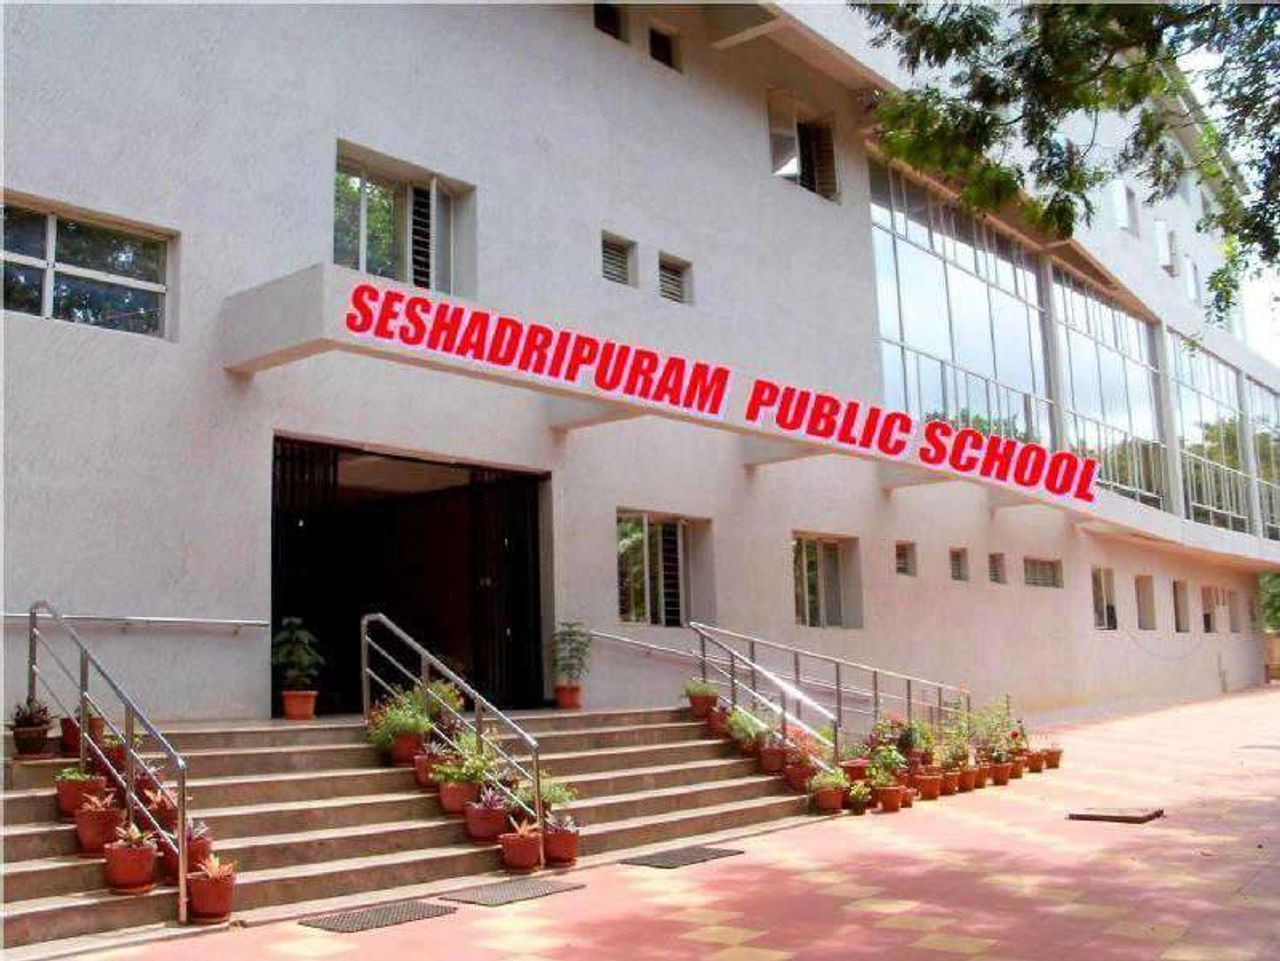 Seshadripuram Public School - Yelahanka New Town Cover Image